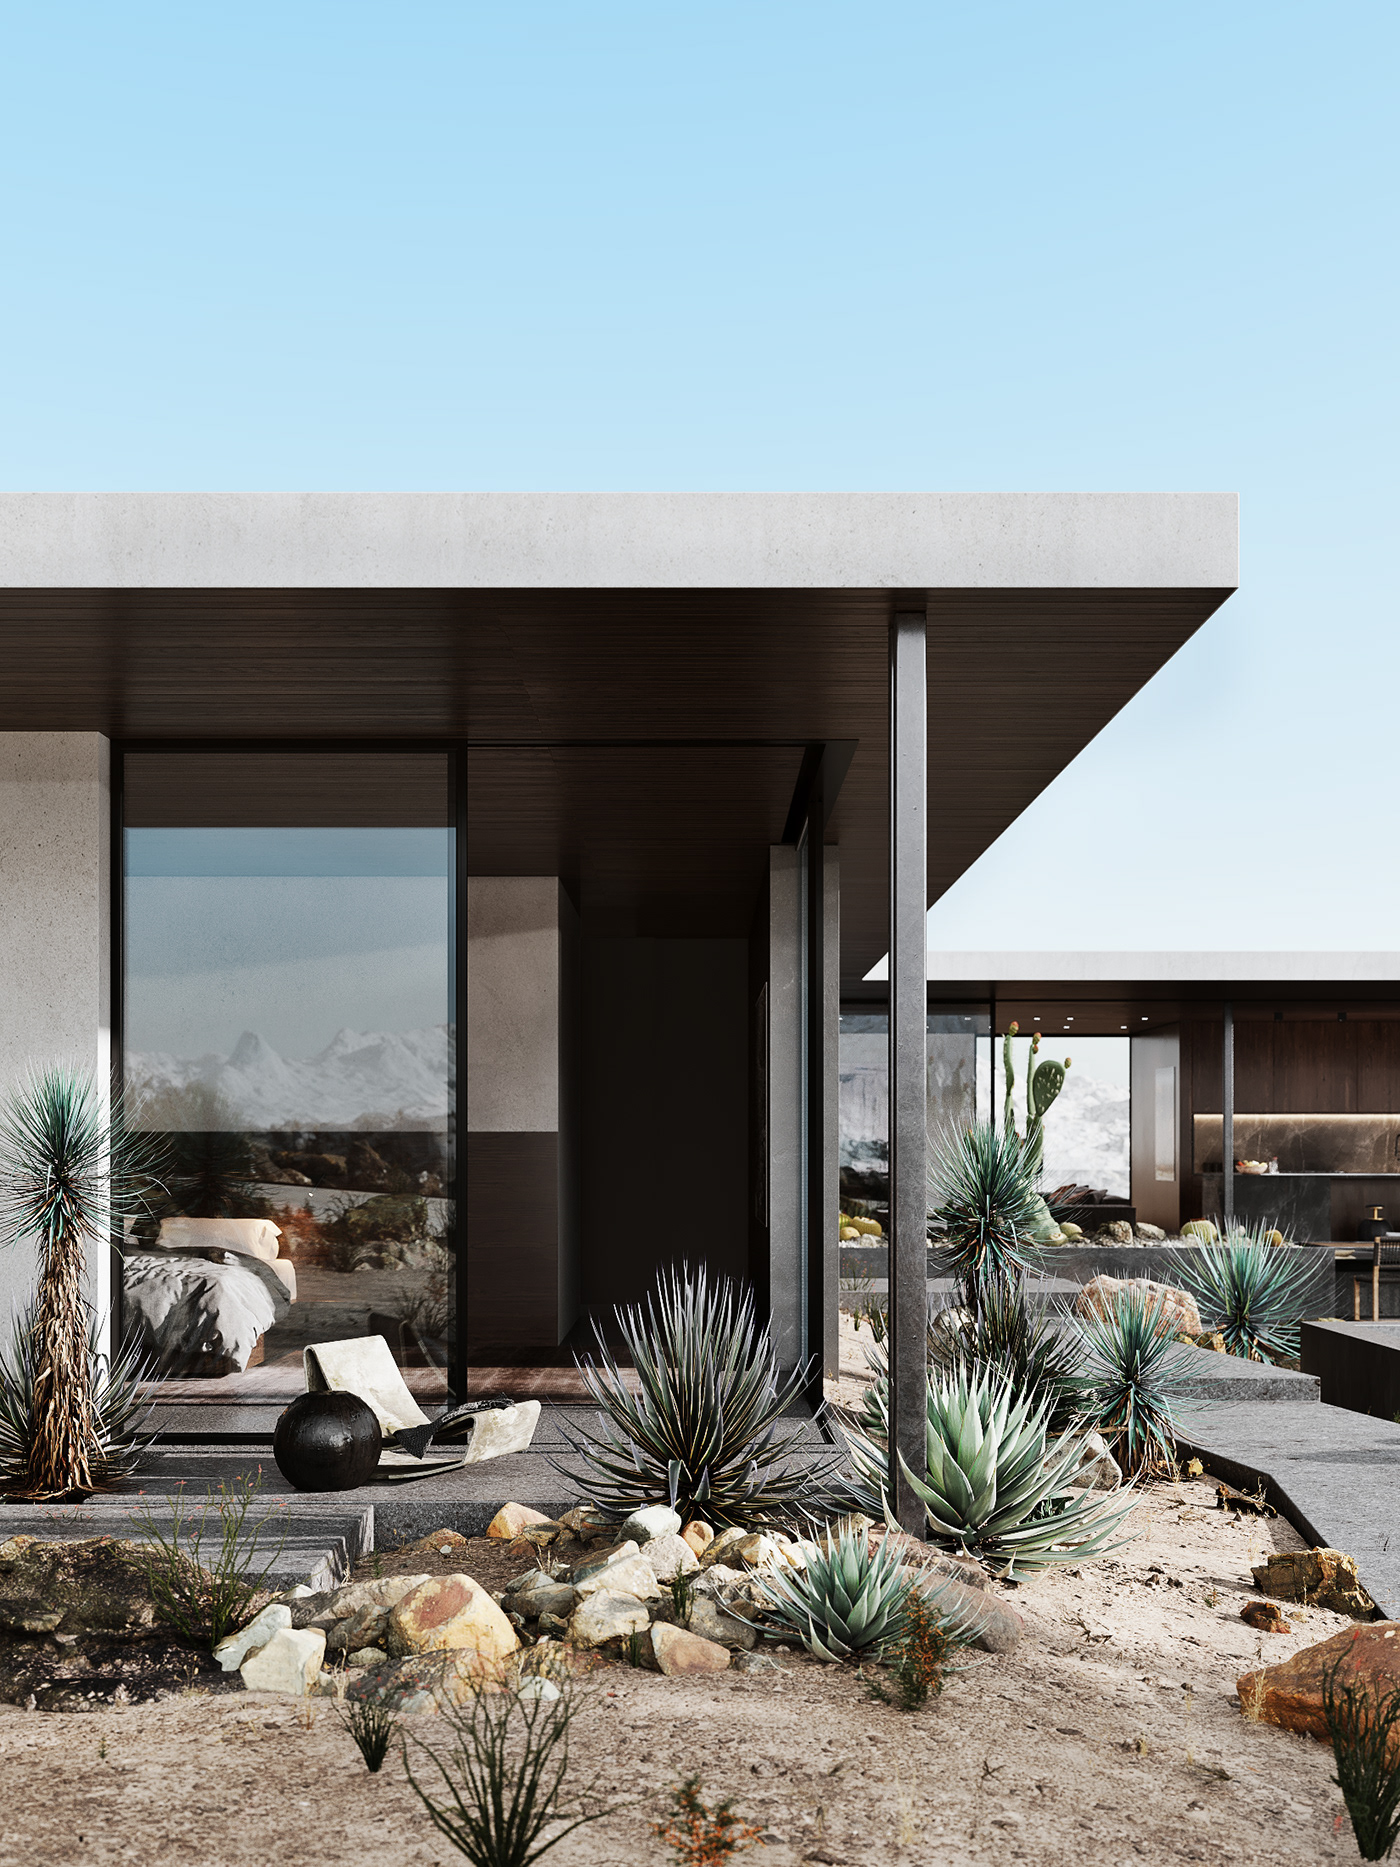 corona architecture design 3d max CGI desert Villa caaaactus